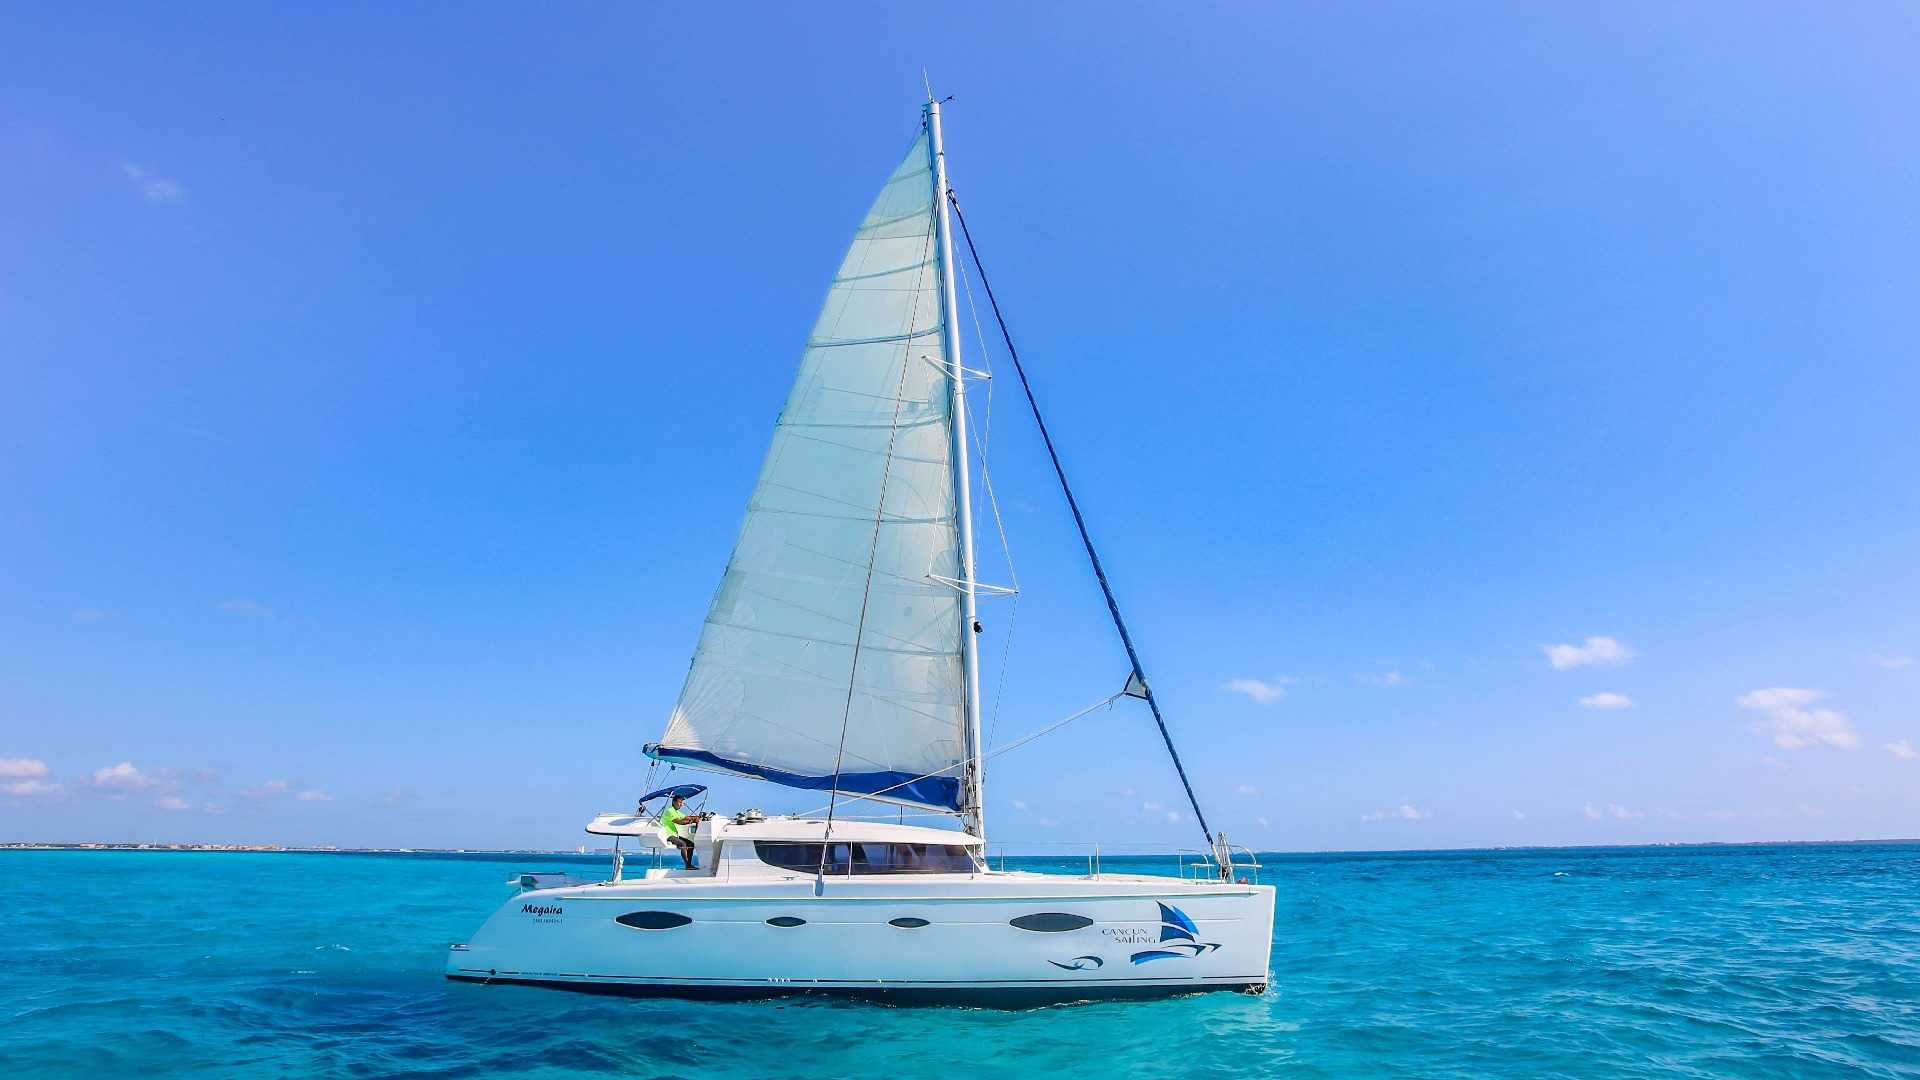 2 - LowRes Megaira- Private tour to Isla Mujeres in catamaran - Cancun Sailing